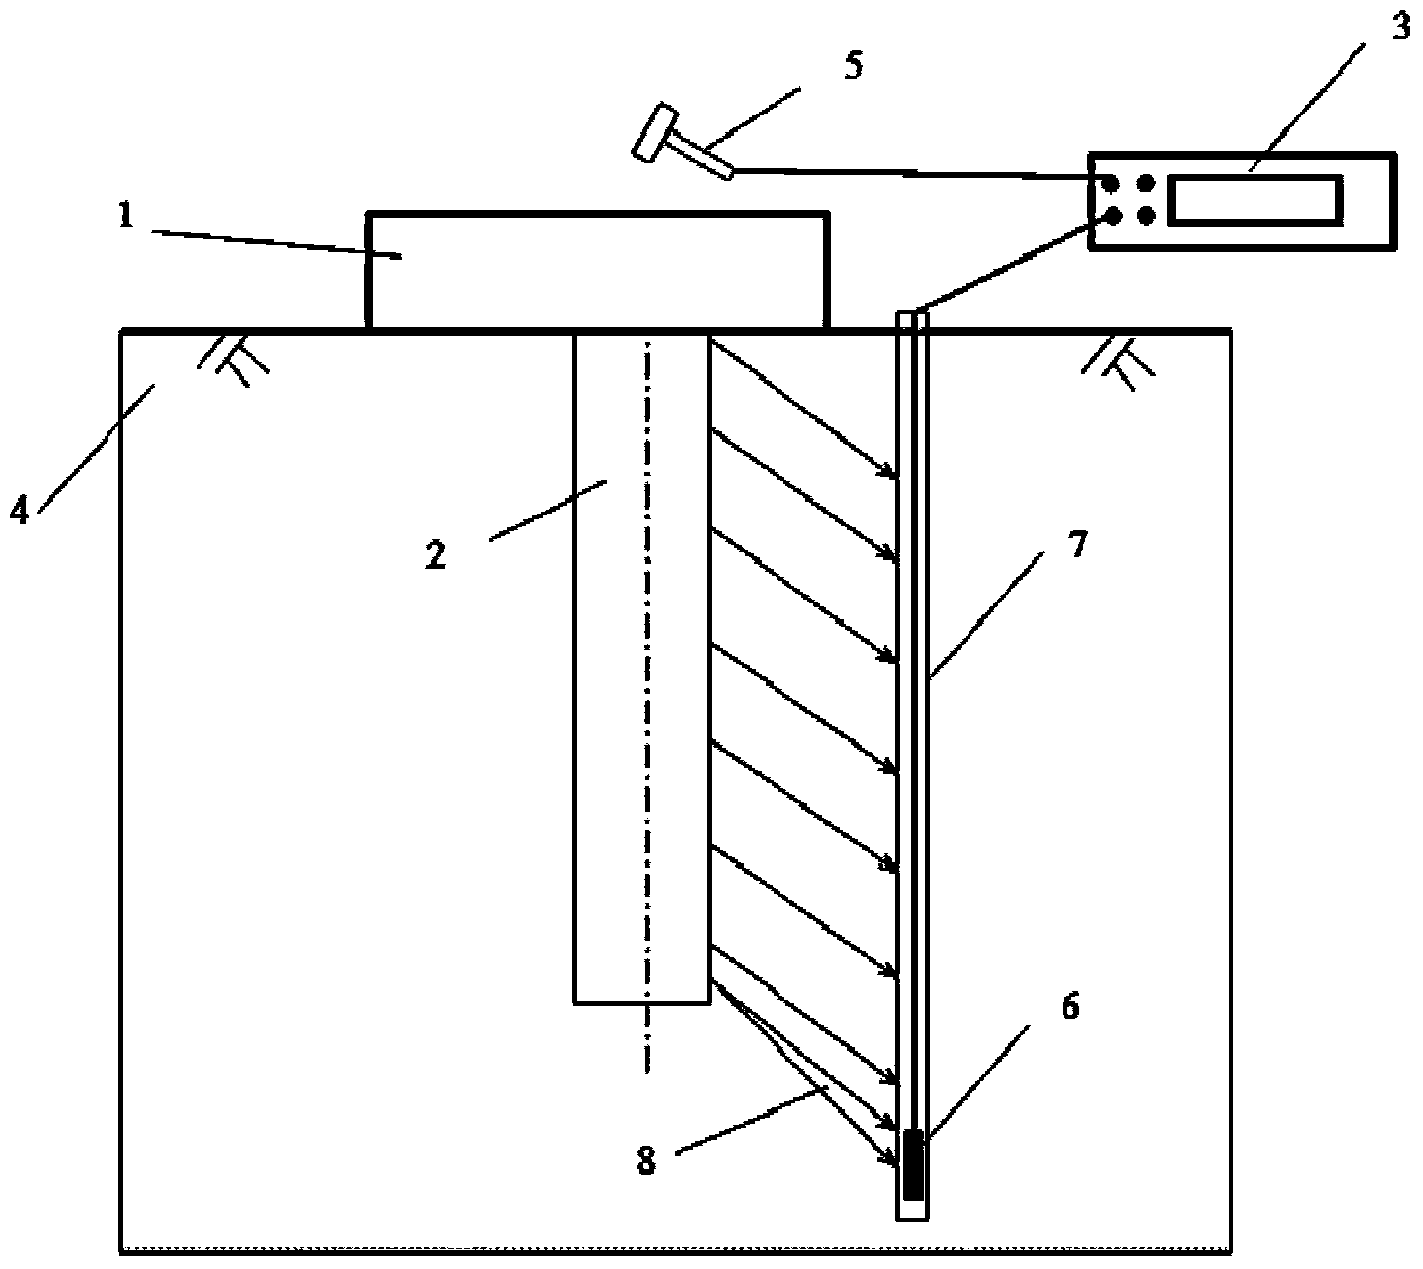 Existing engineering pile bottom depth determination method based on parallel seismic inflexion-point method